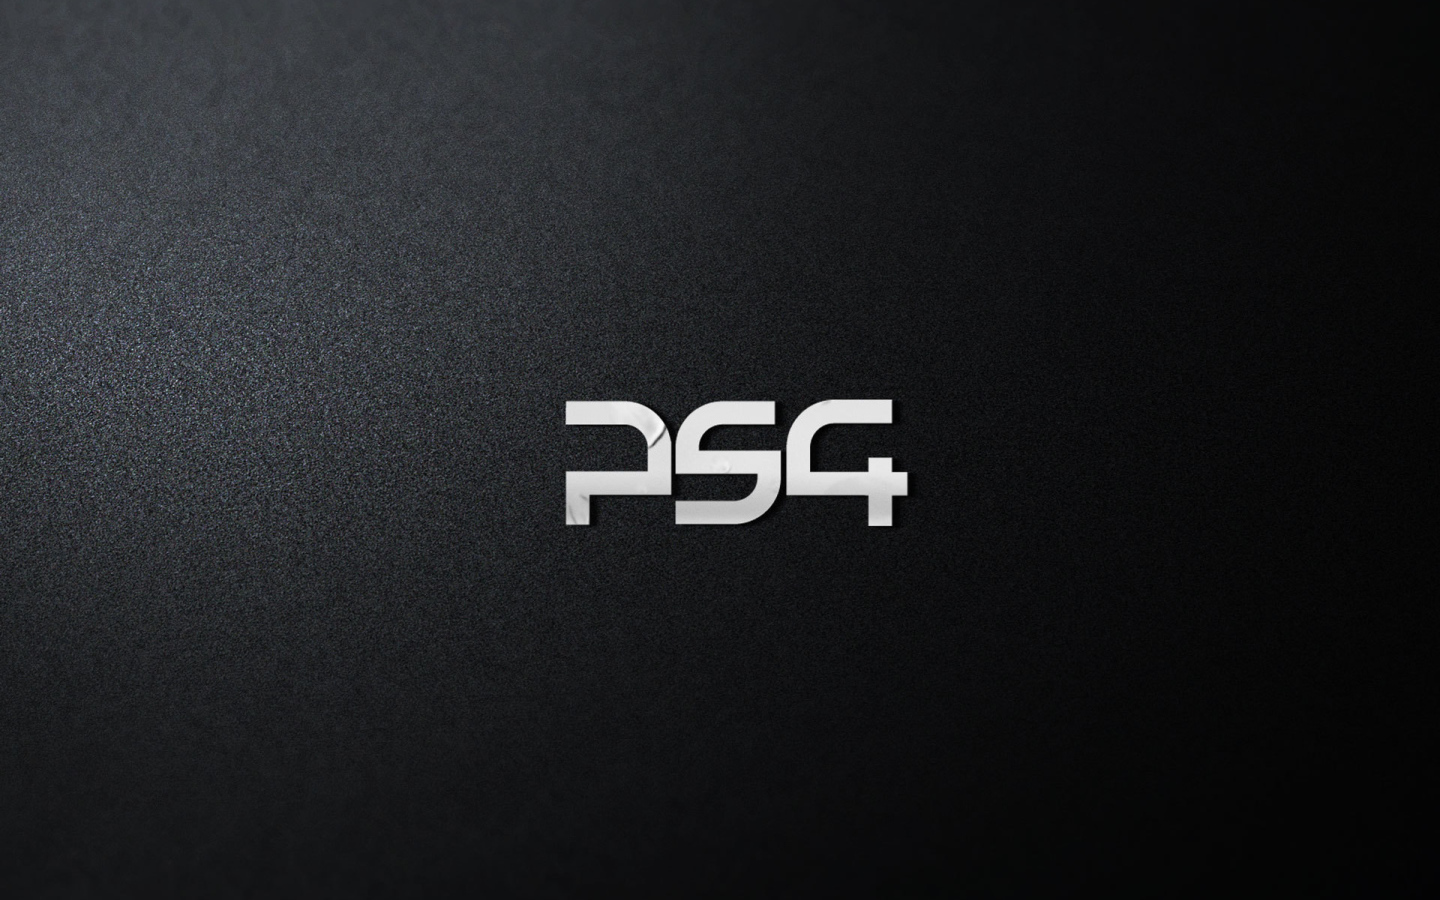 PS4 Minimal logo Desktop wallpapers 1440x900 1440x900